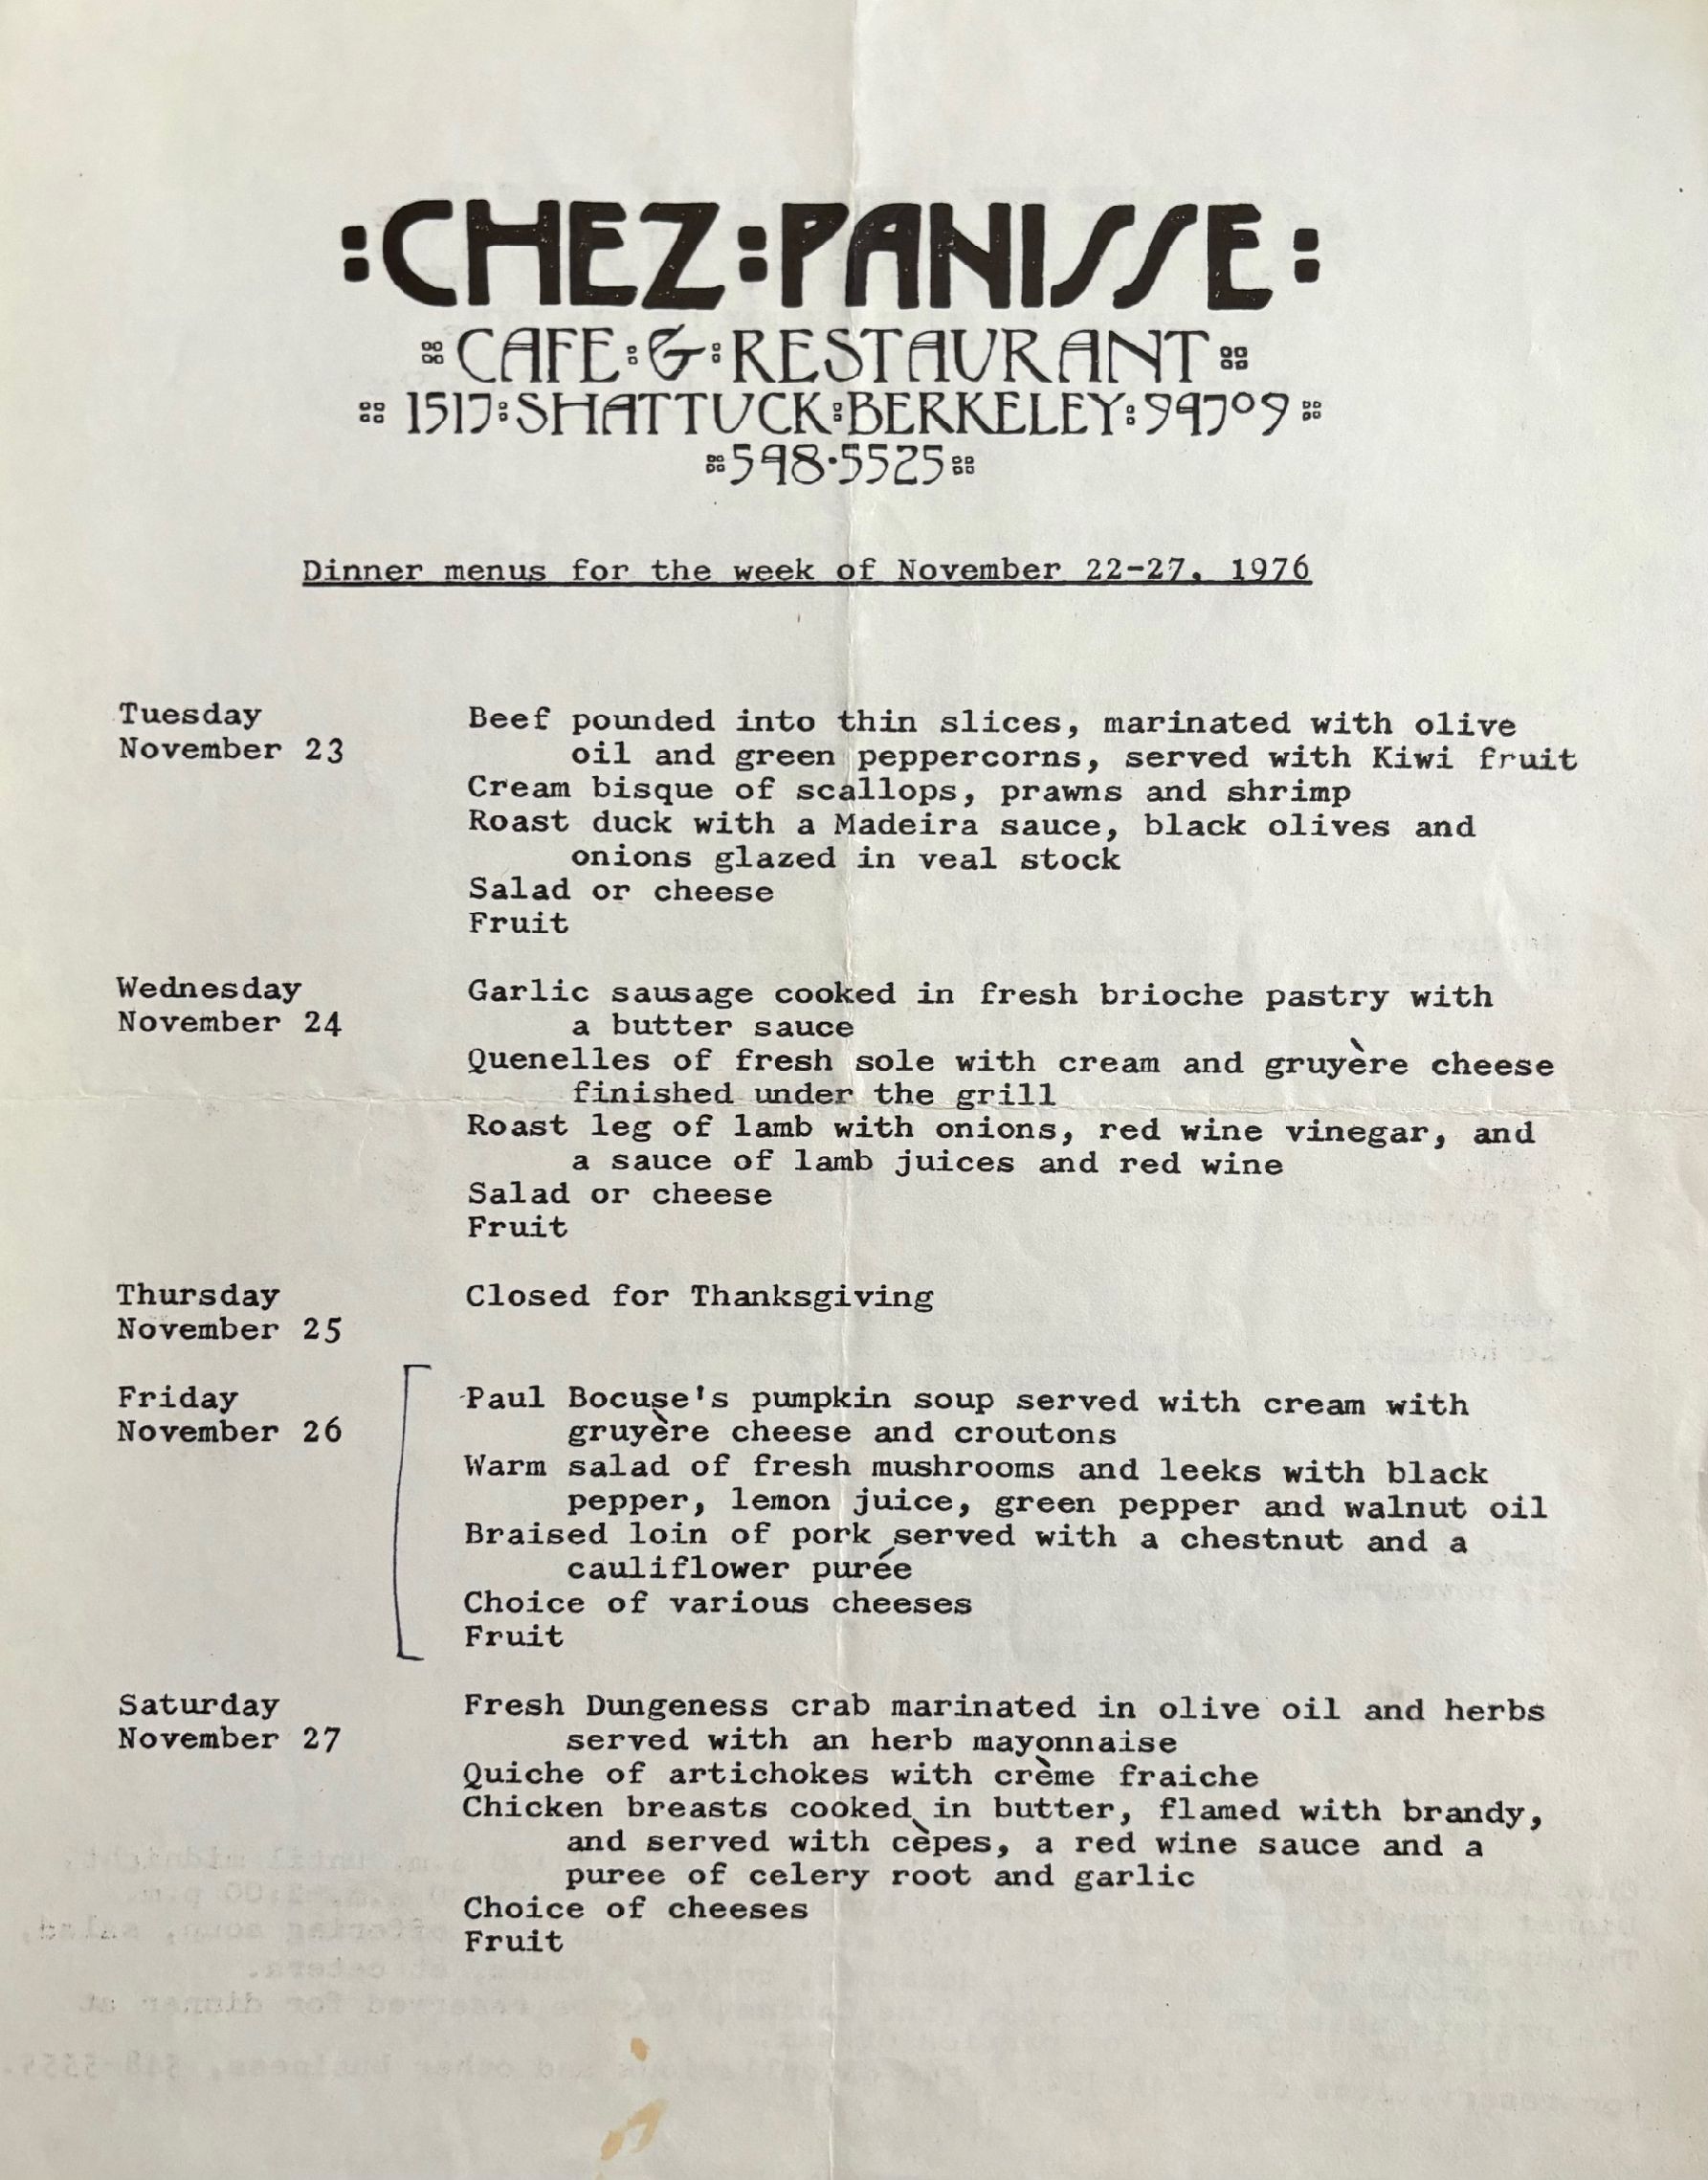 (*NEW ARRIVAL*) Chez Panisse. Dinner Menus for the Week - Nov. 22-27, 1976